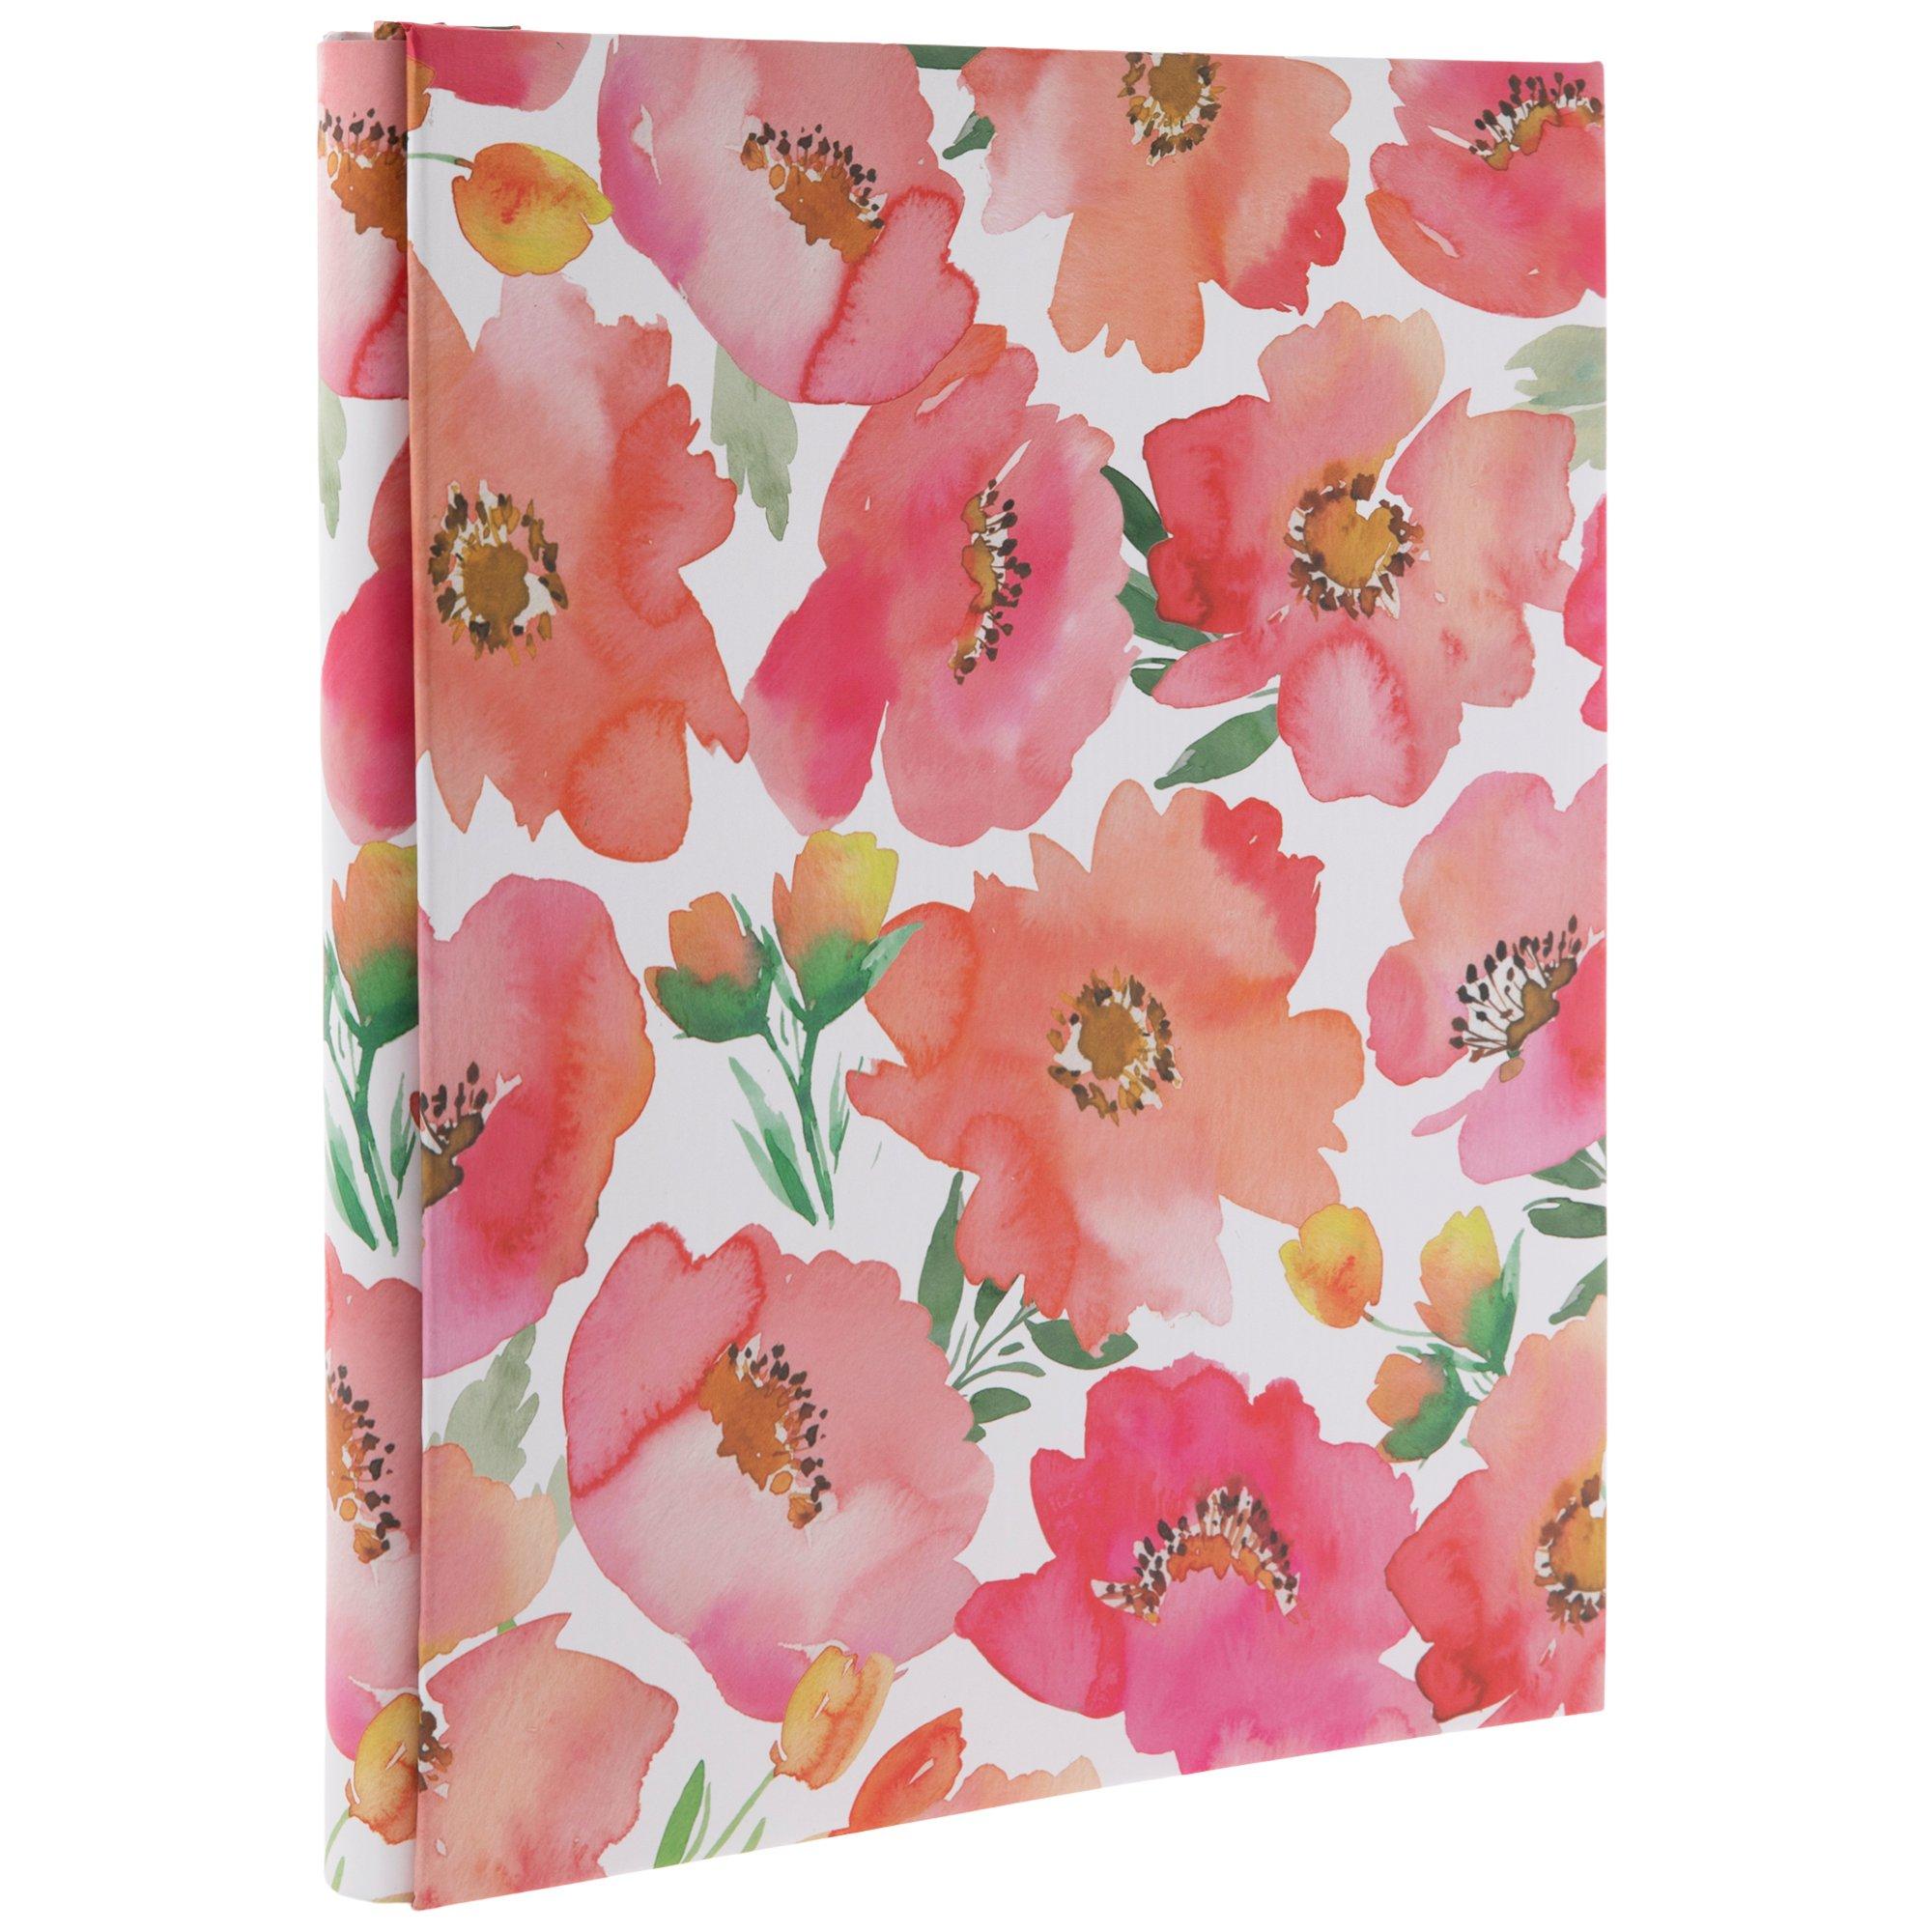 Pink Roses Scrapbook Paper - 8 1/2 x 11